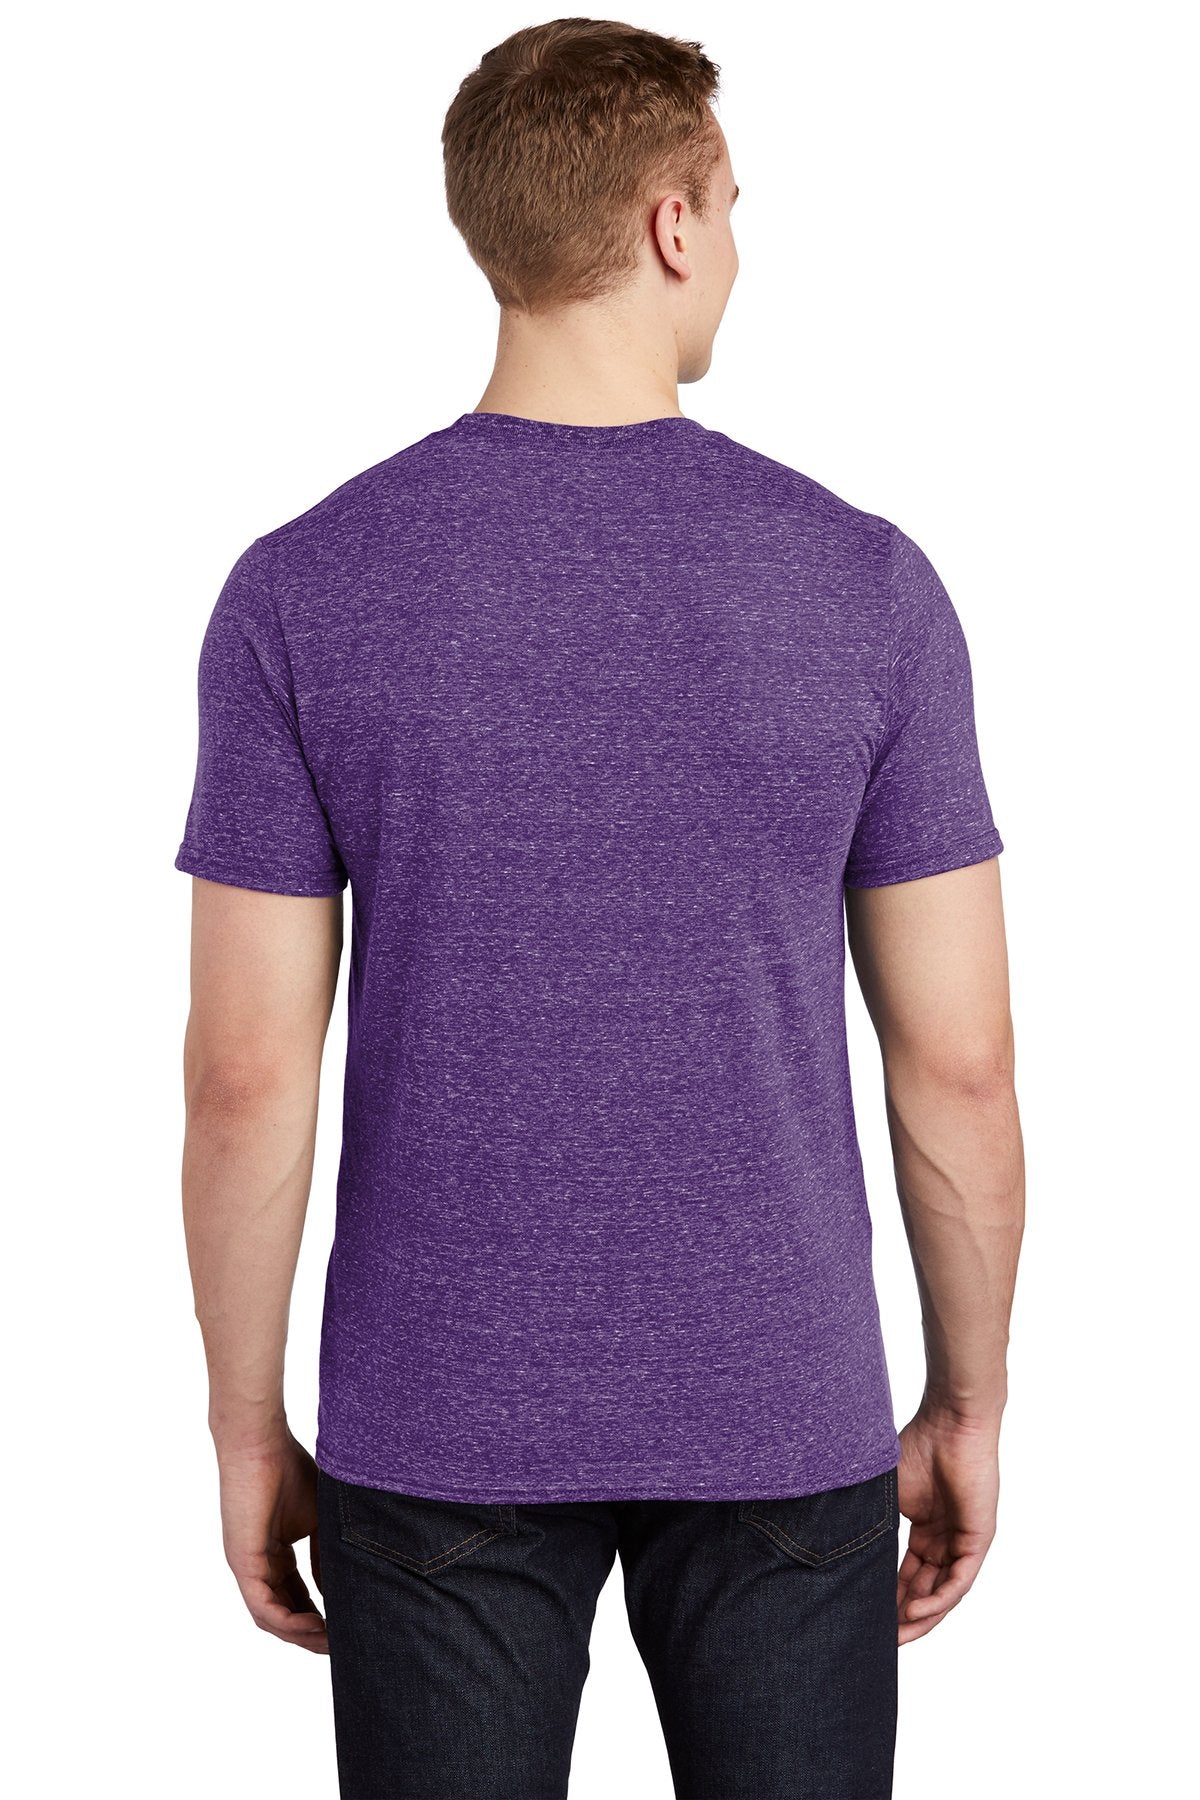 Jerzees Snow Heather Jersey T-Shirt 88M Purple